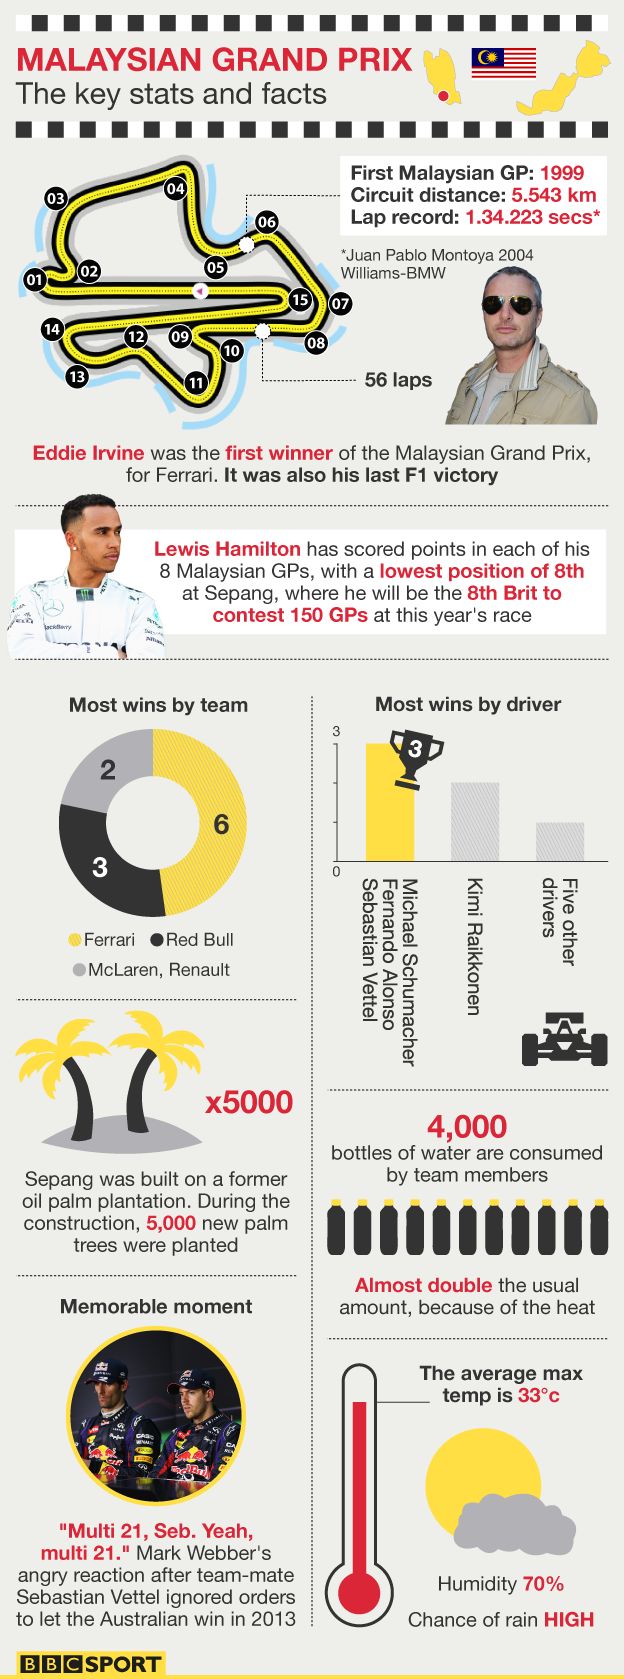 Malaysian Grand Prix facts